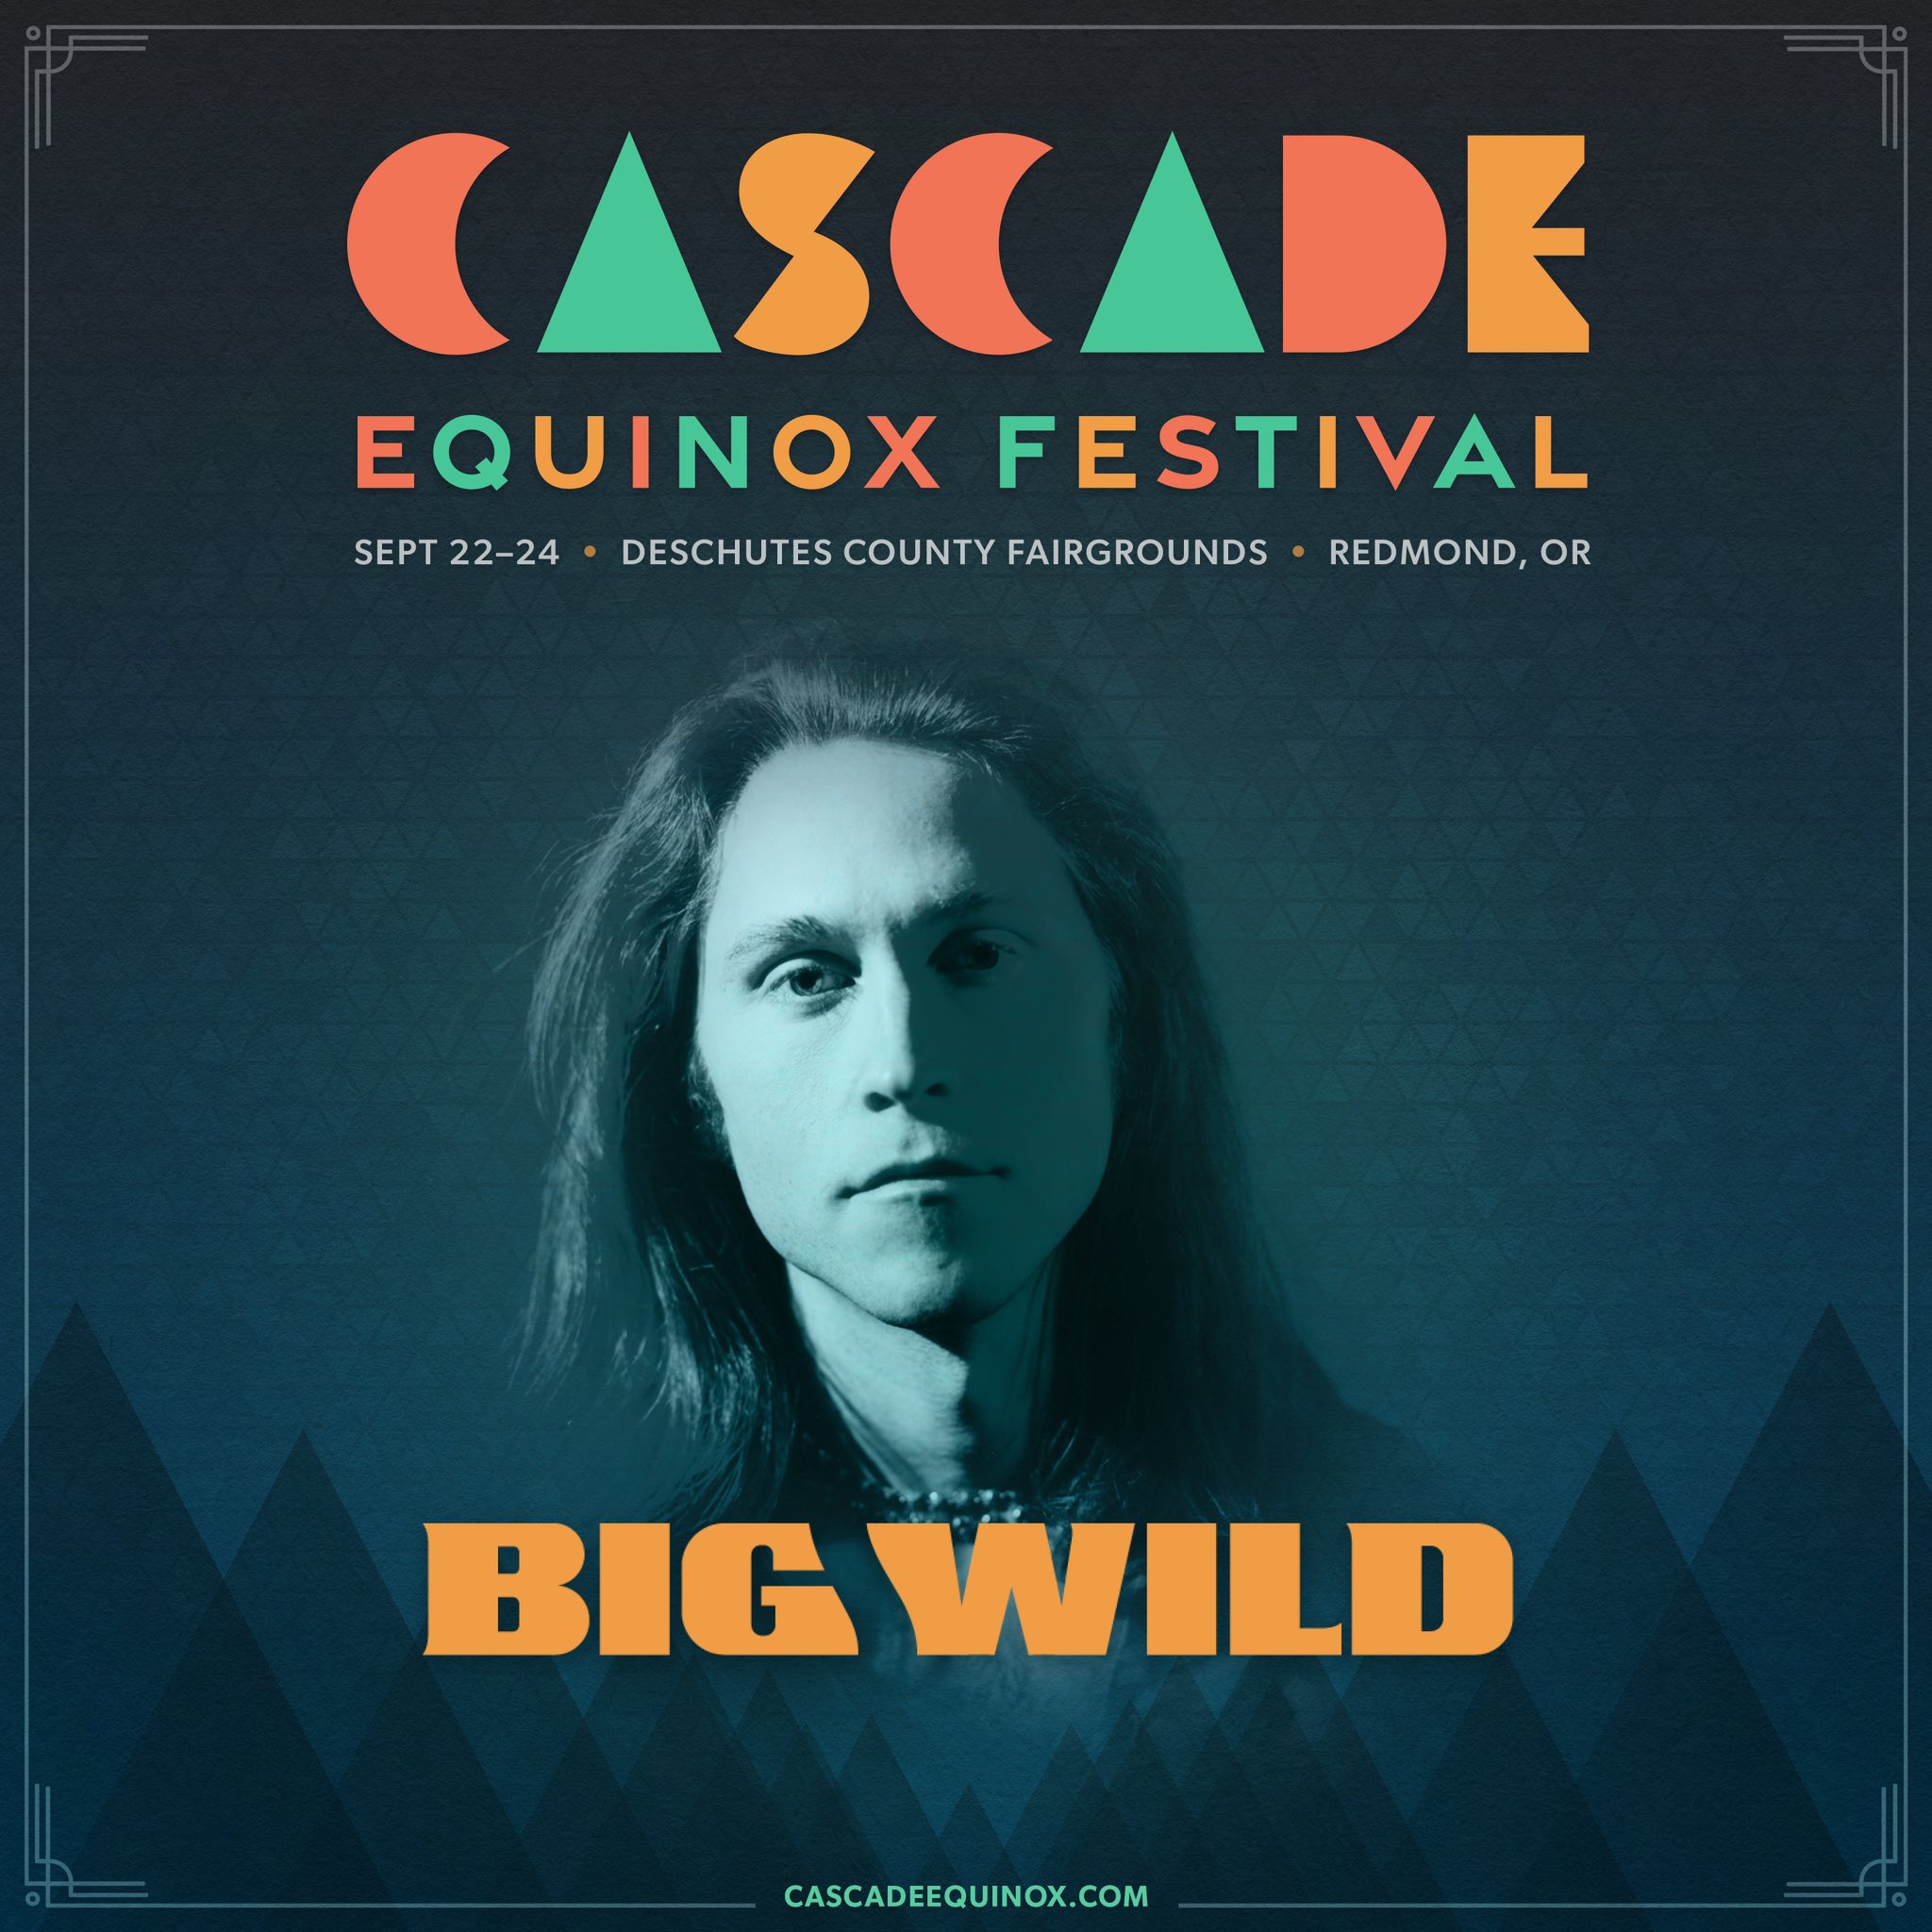 Big Wild Announced As Third Headliner By Cascade Equinox Festival